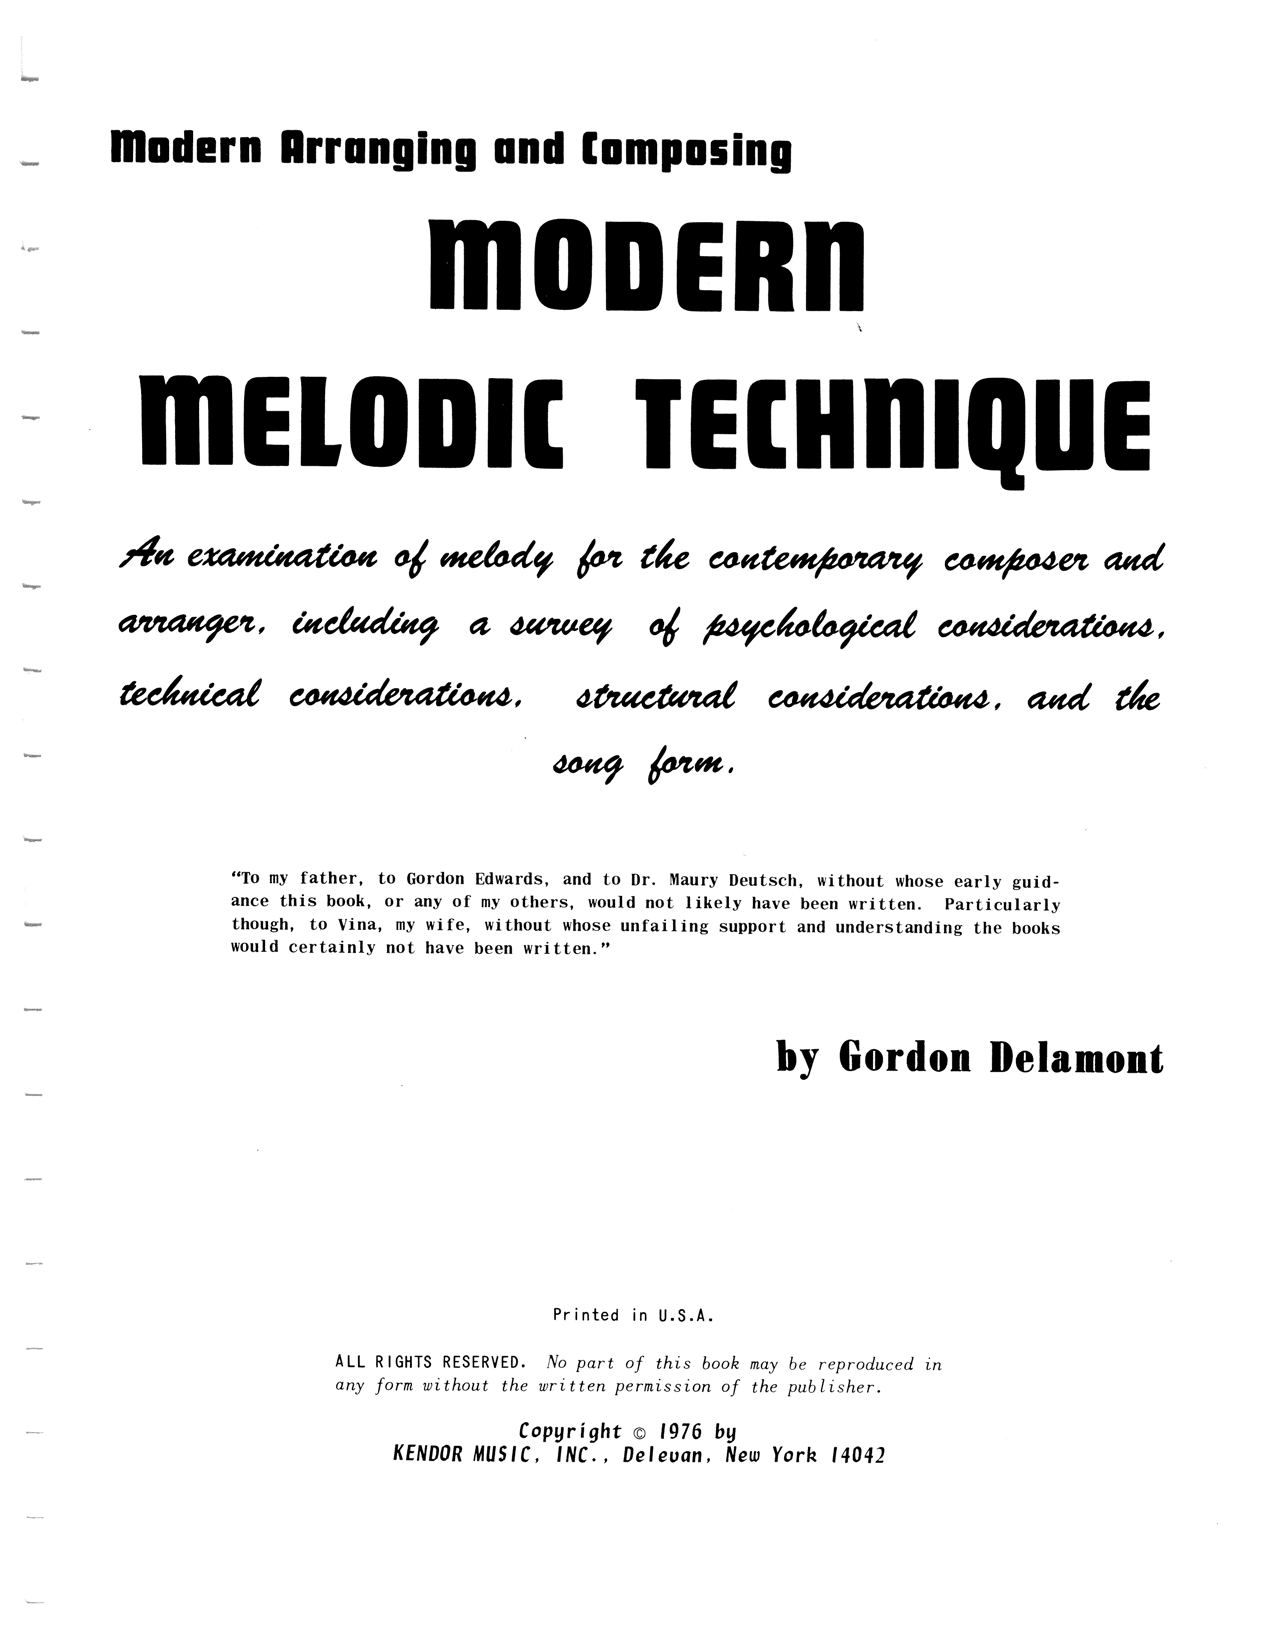 Download Gordon Delamont Modern Melodic Technique Sheet Music